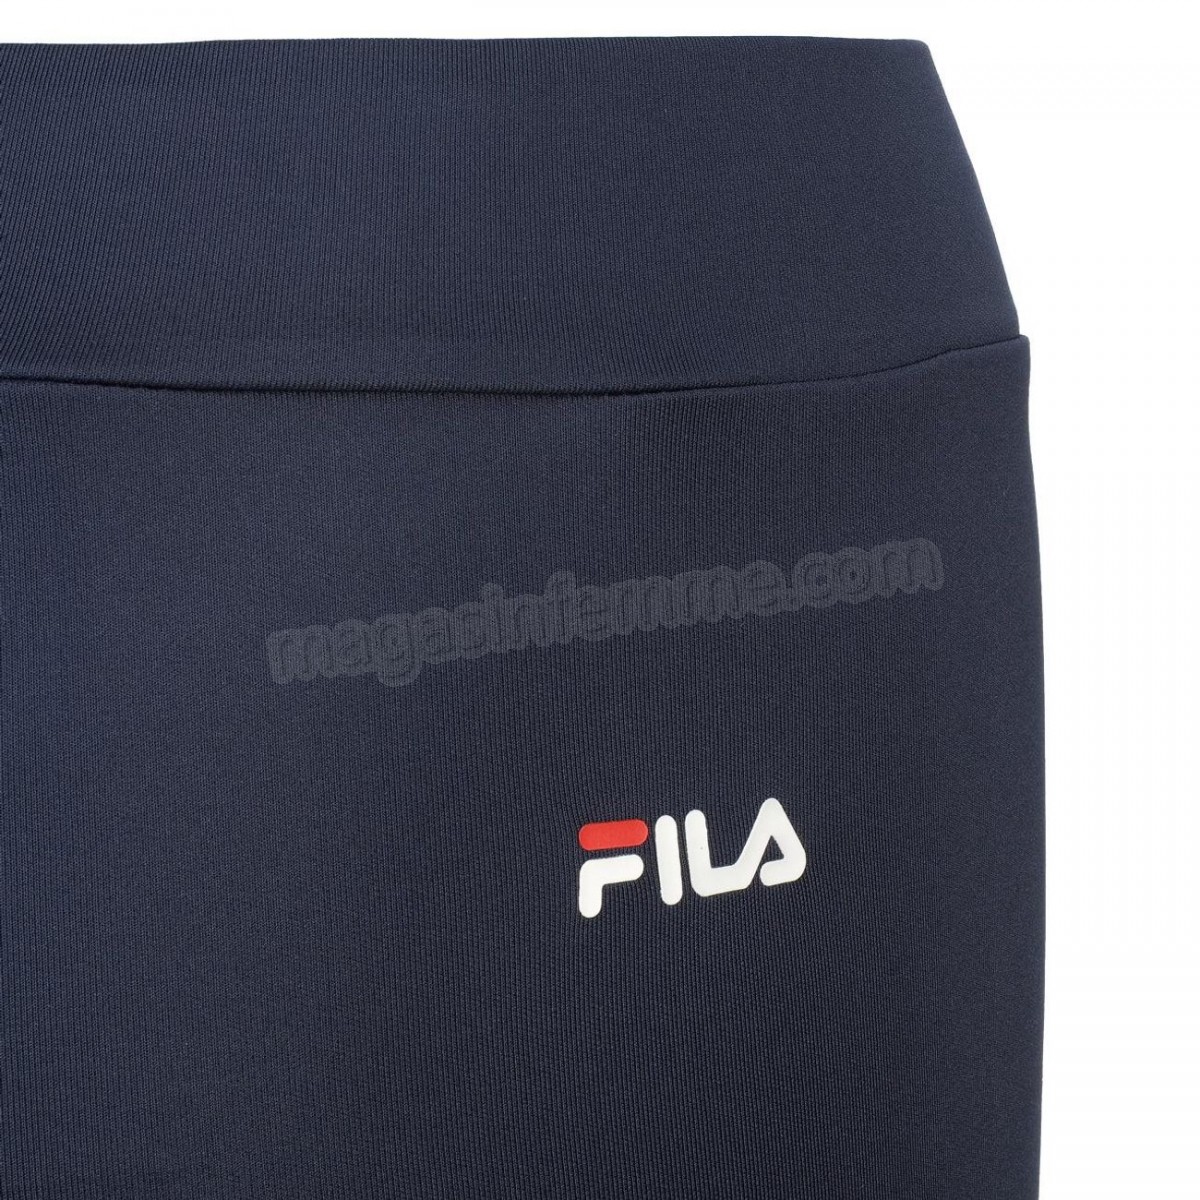 Fila-Mode- Lifestyle femme FILA Collants Flex 2.0 en solde - -4